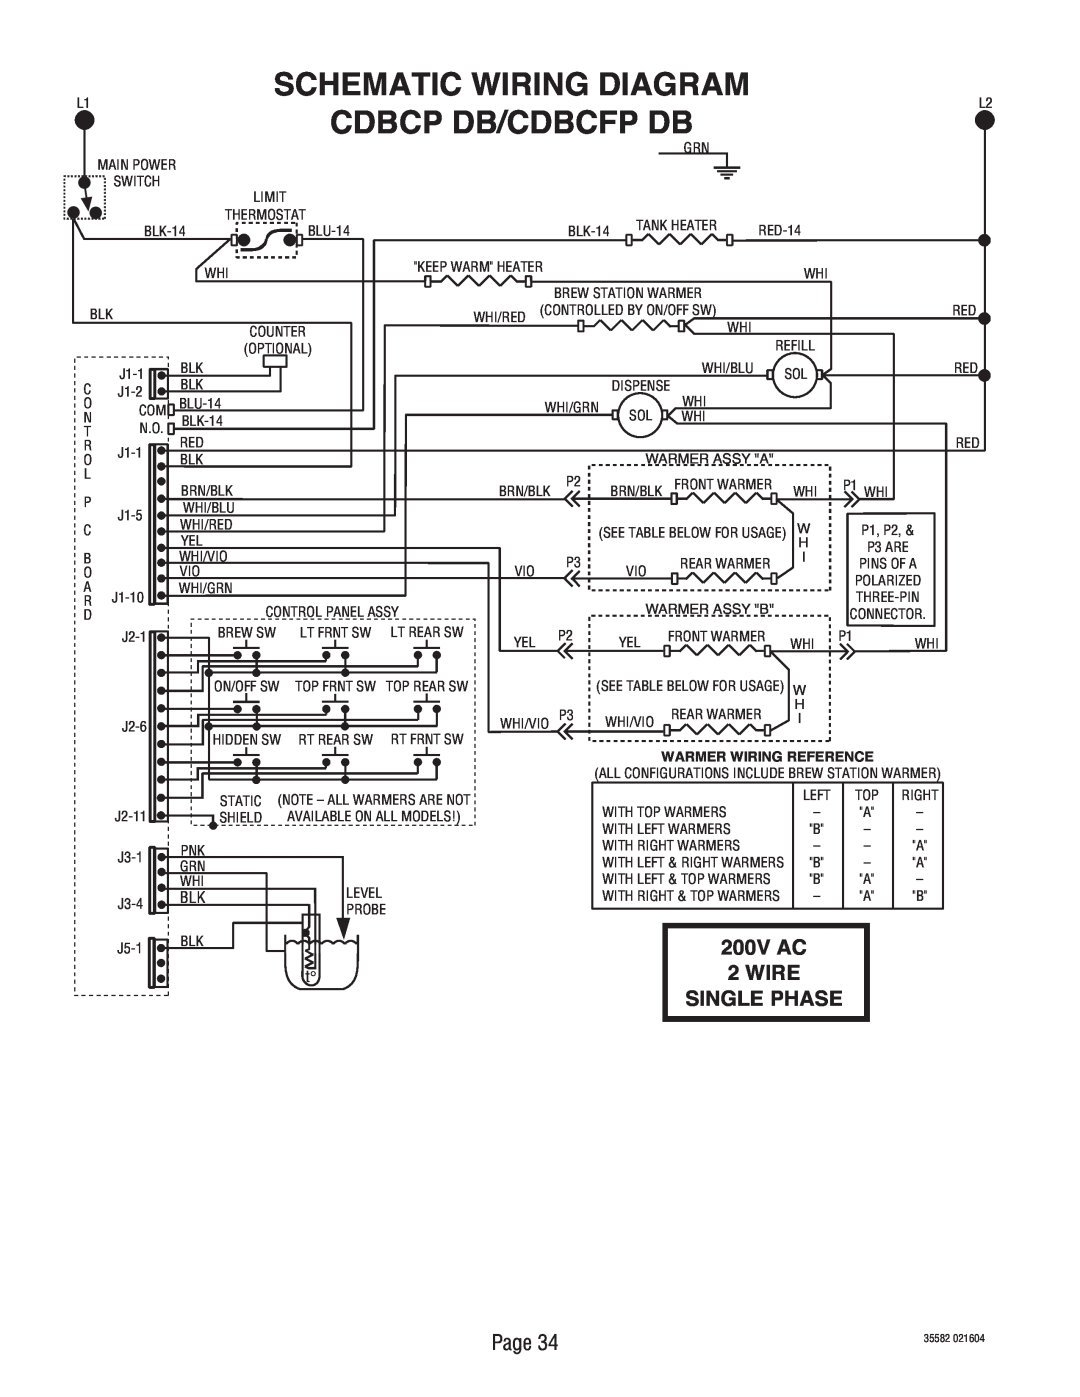 Bunn CDBCFP, CDBCP Schematic Wiring Diagram, Cdbcp Db/Cdbcfp Db, 200V AC 2WIRE SINGLE PHASE, Warmer Wiring Reference 